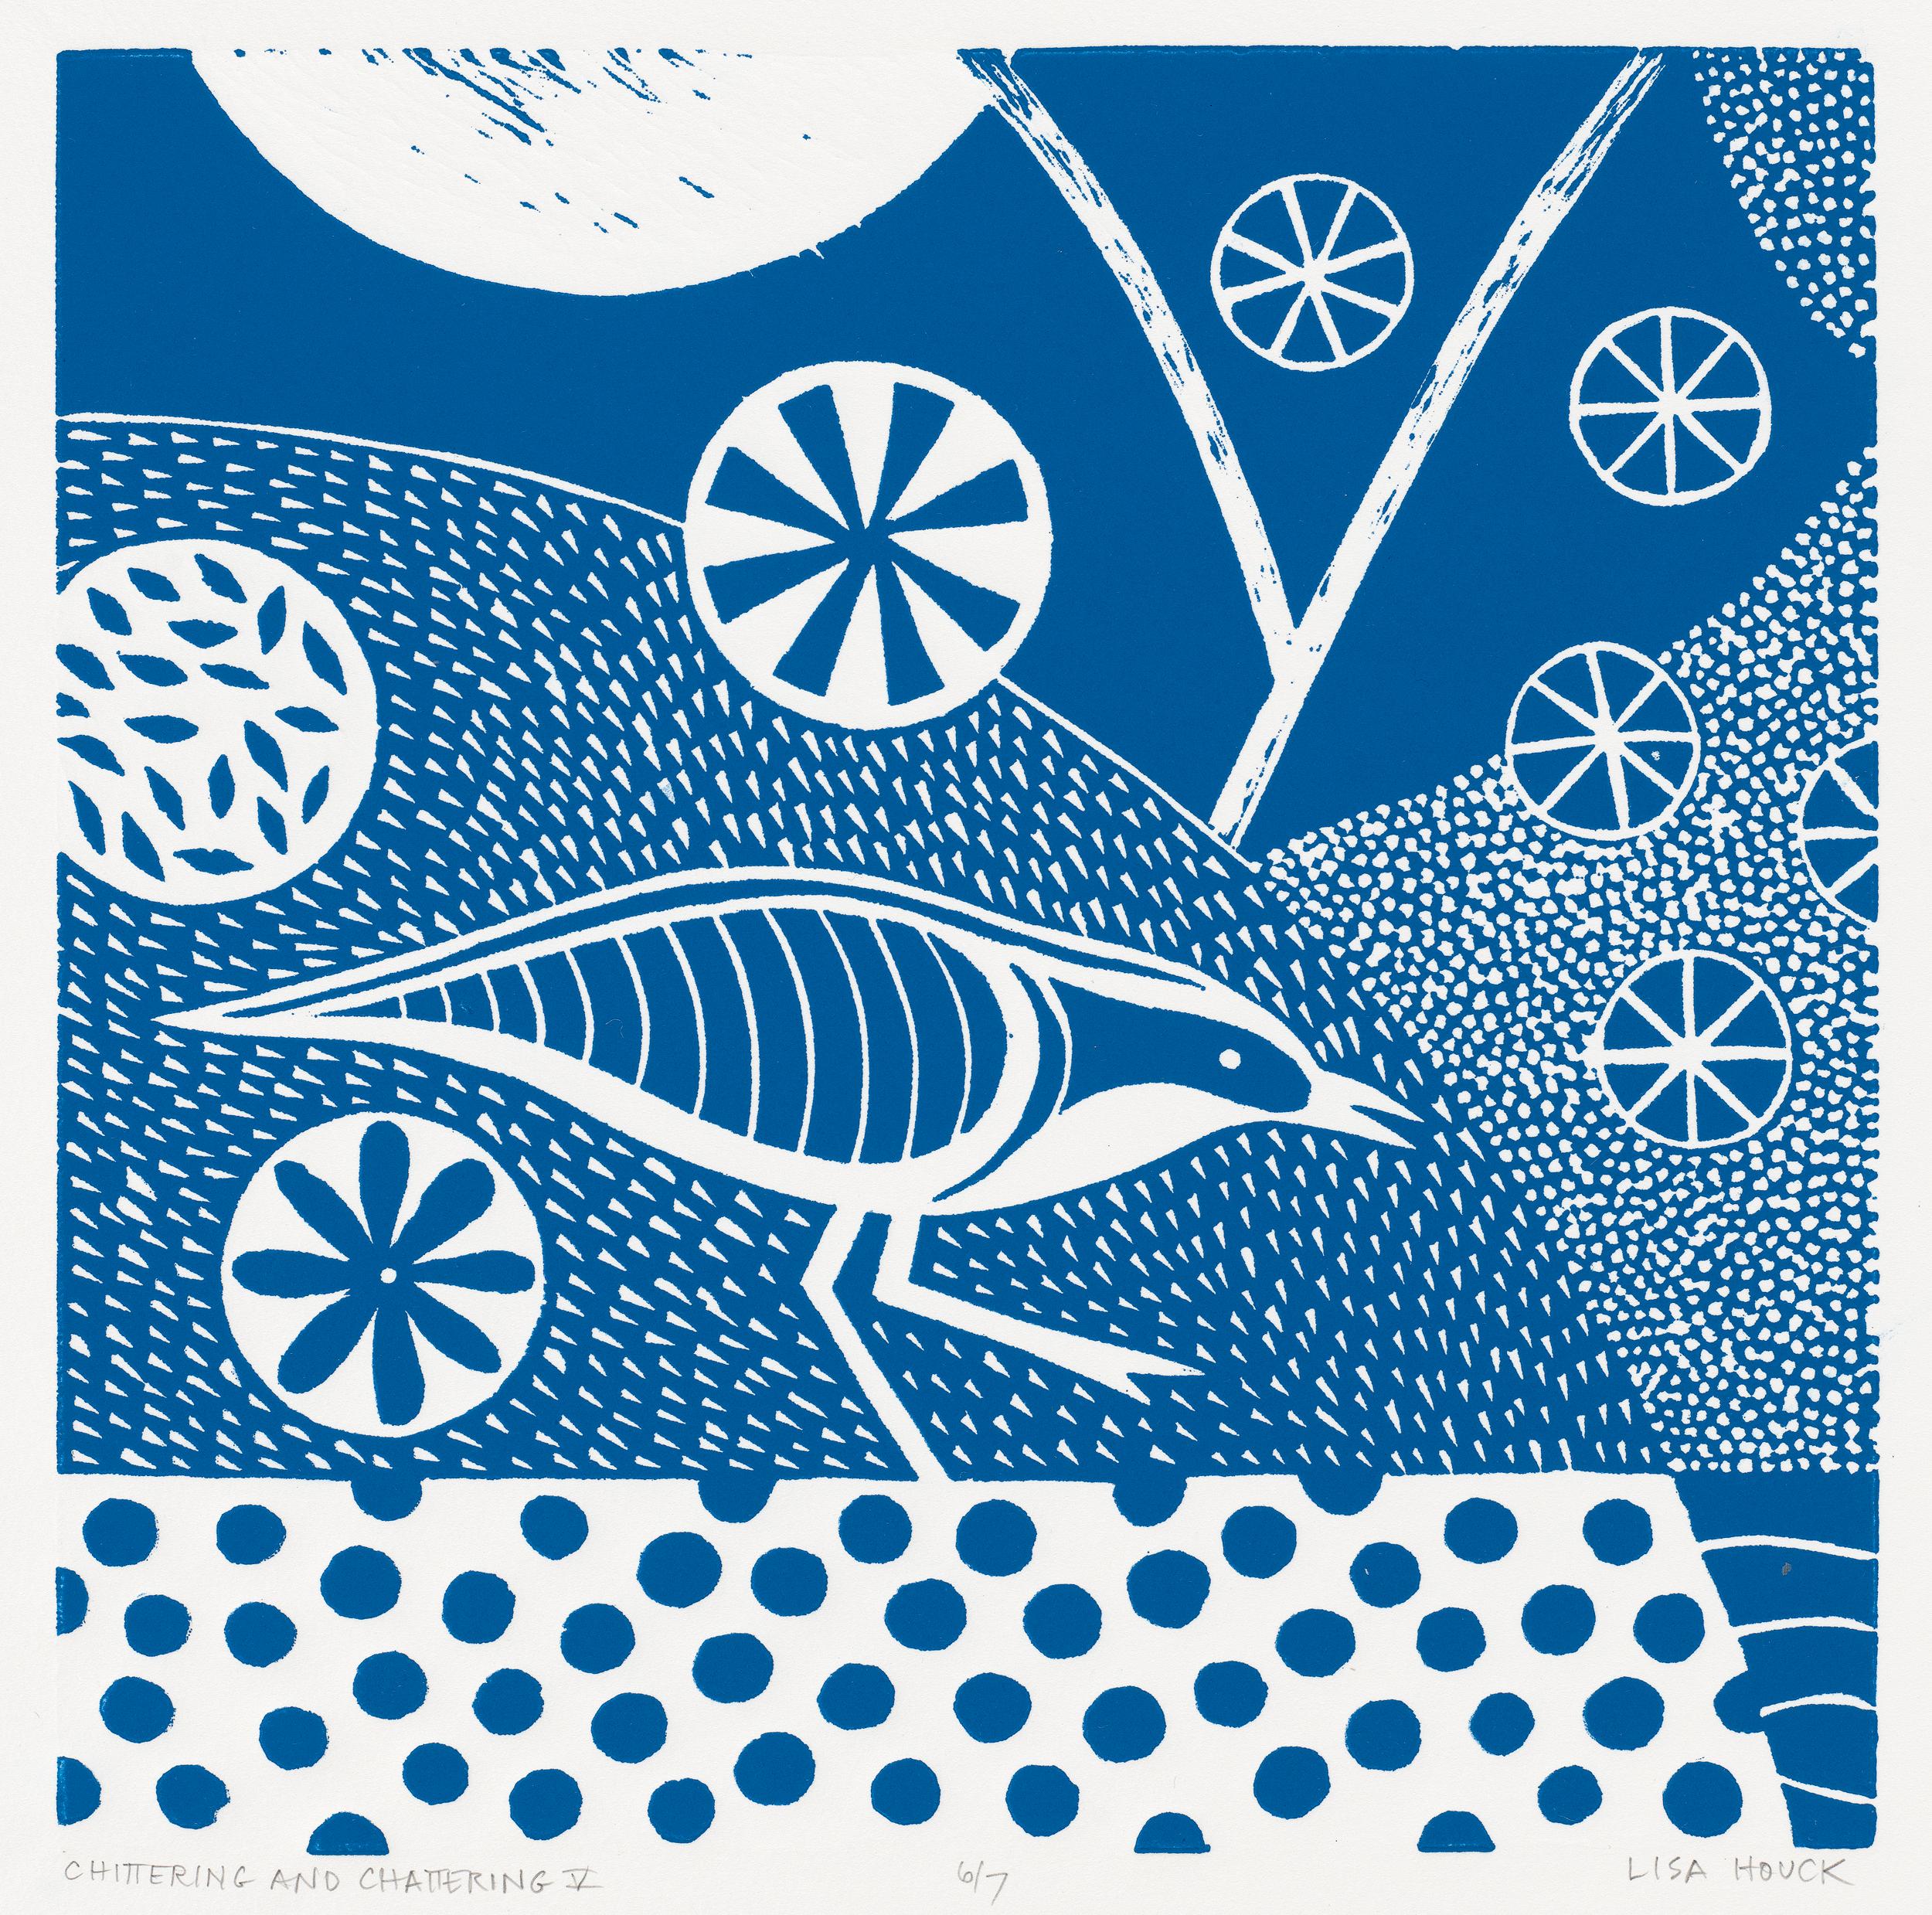 Animal Print Lisa Houck - « Chittering & Chattering V »  série de linogravures d'oiseaux d'inspiration folklorique en bleu et blanc